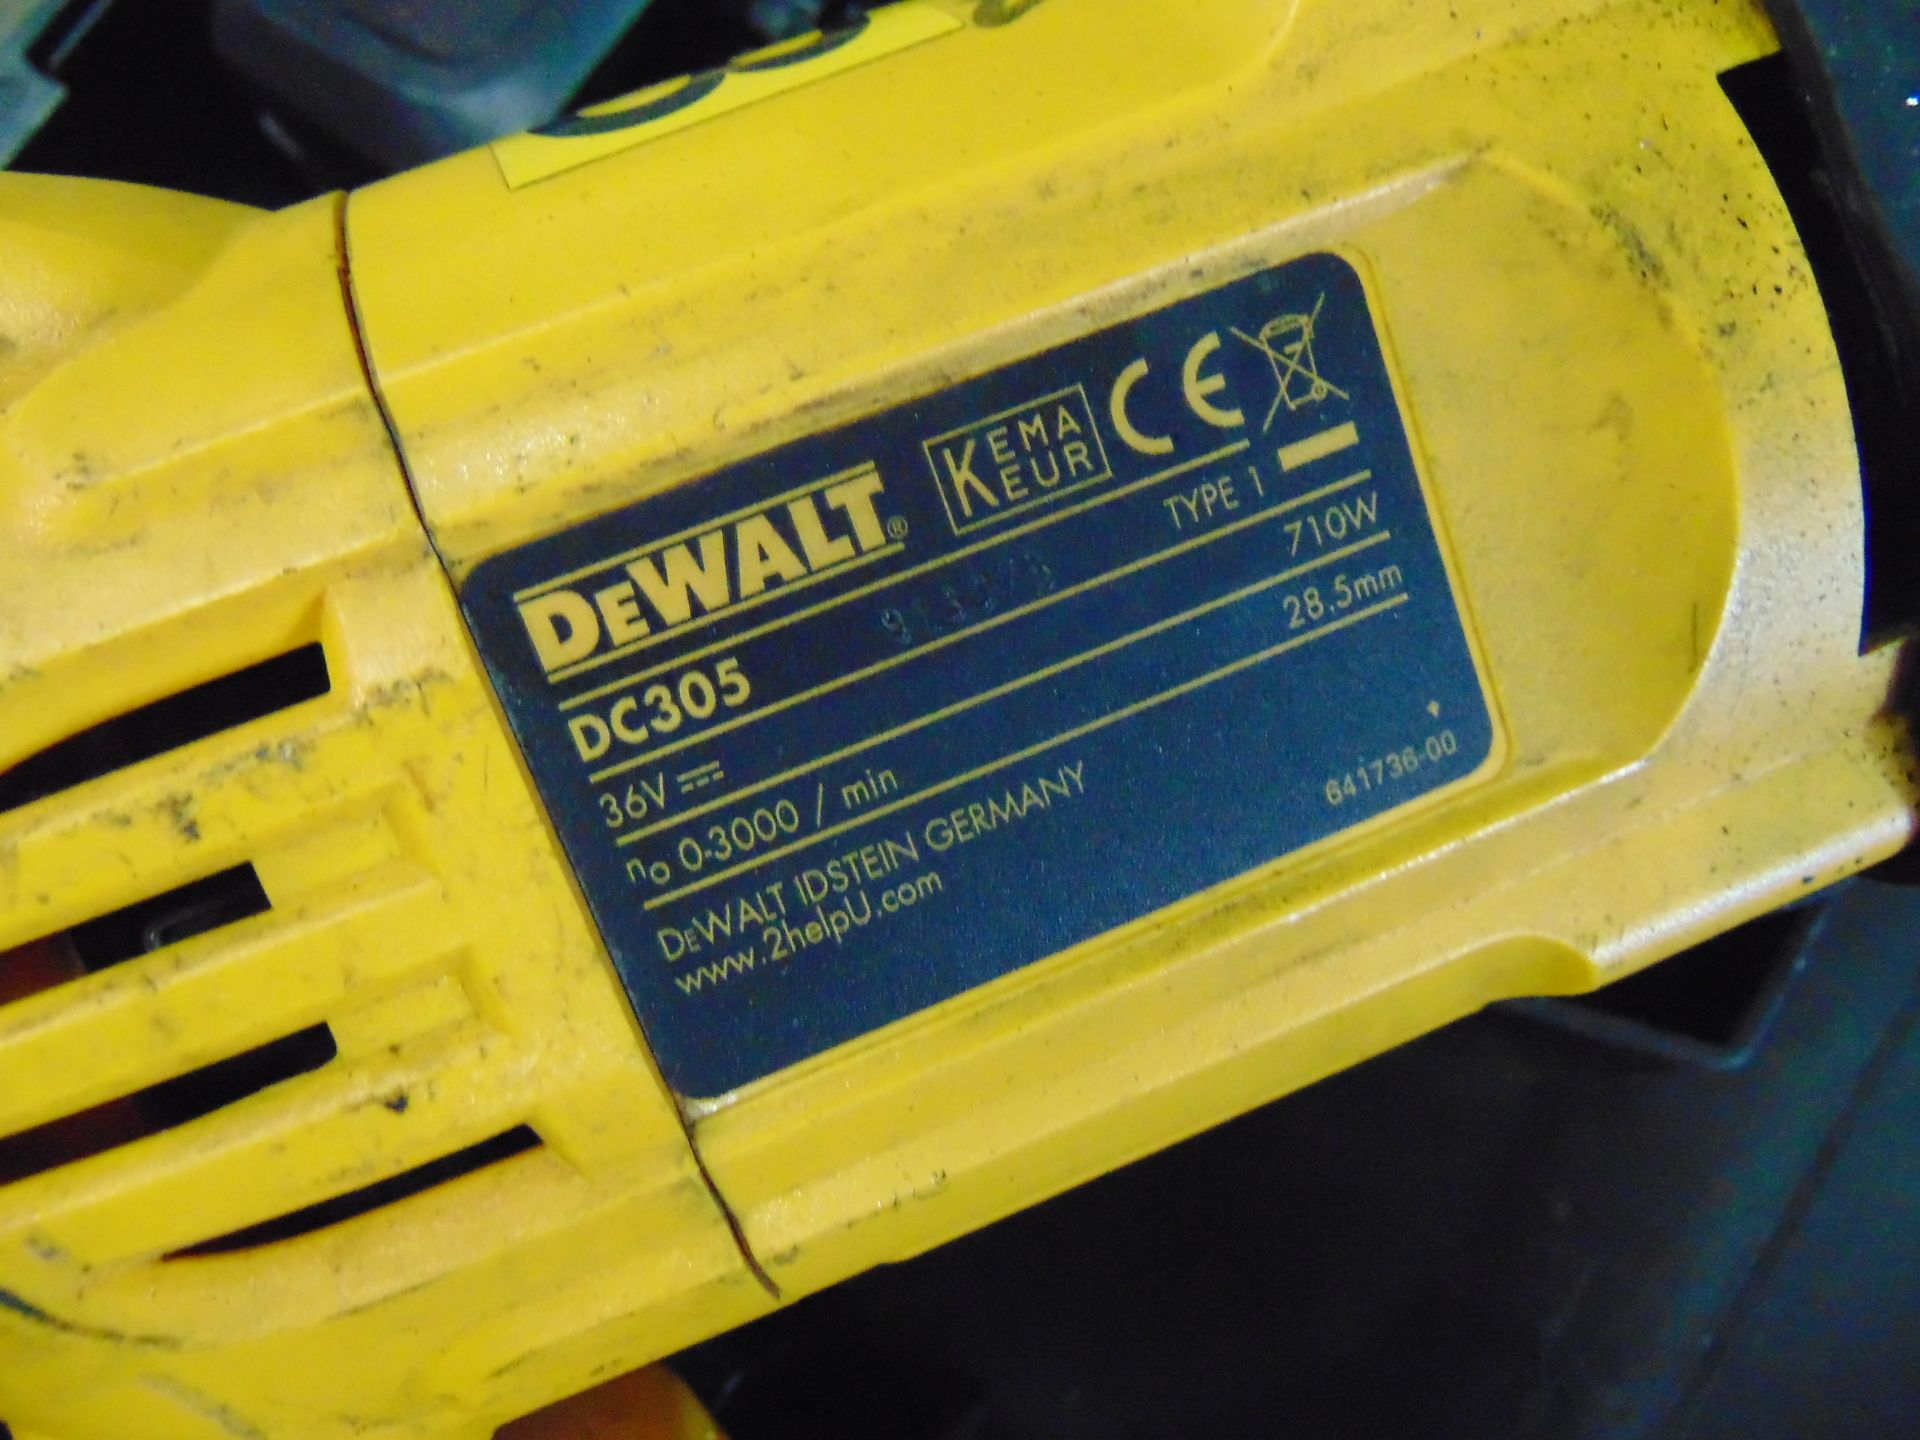 Dewalt DC305 Reciprocating Saw - Image 4 of 6